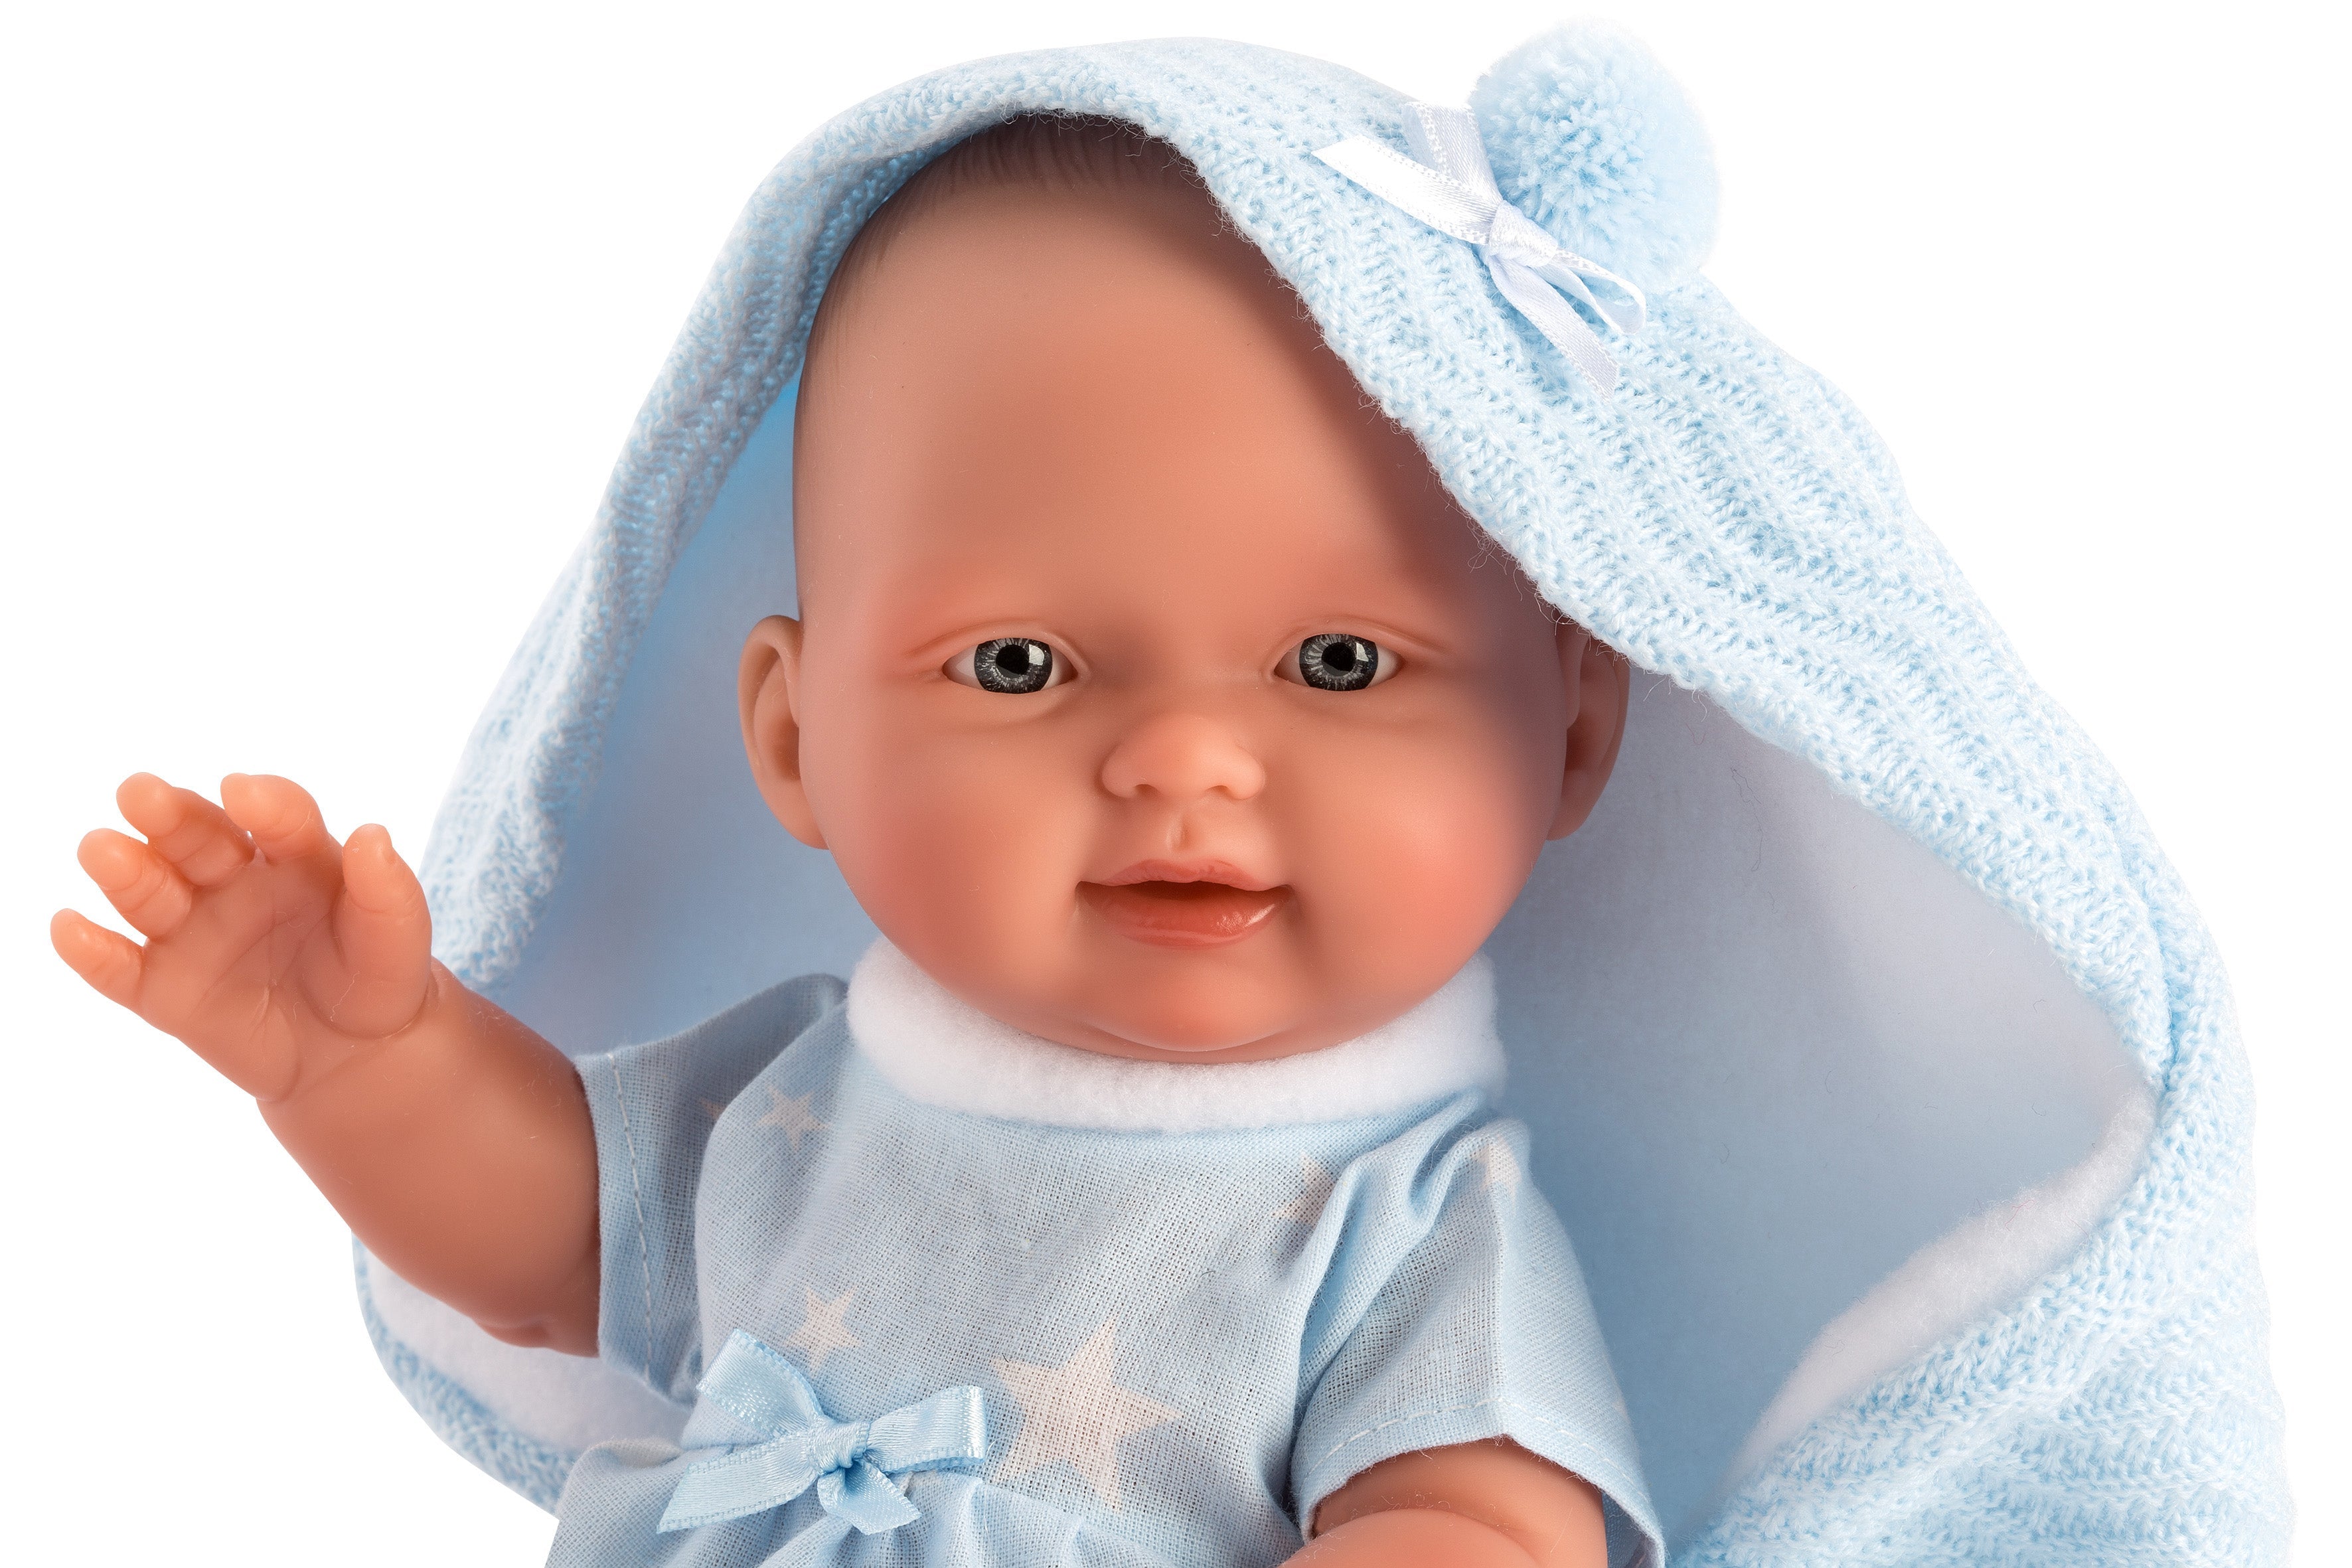 Llorens 10.2" Anatomically-correct Baby Doll Braydon With Swaddle Blanket Dolls